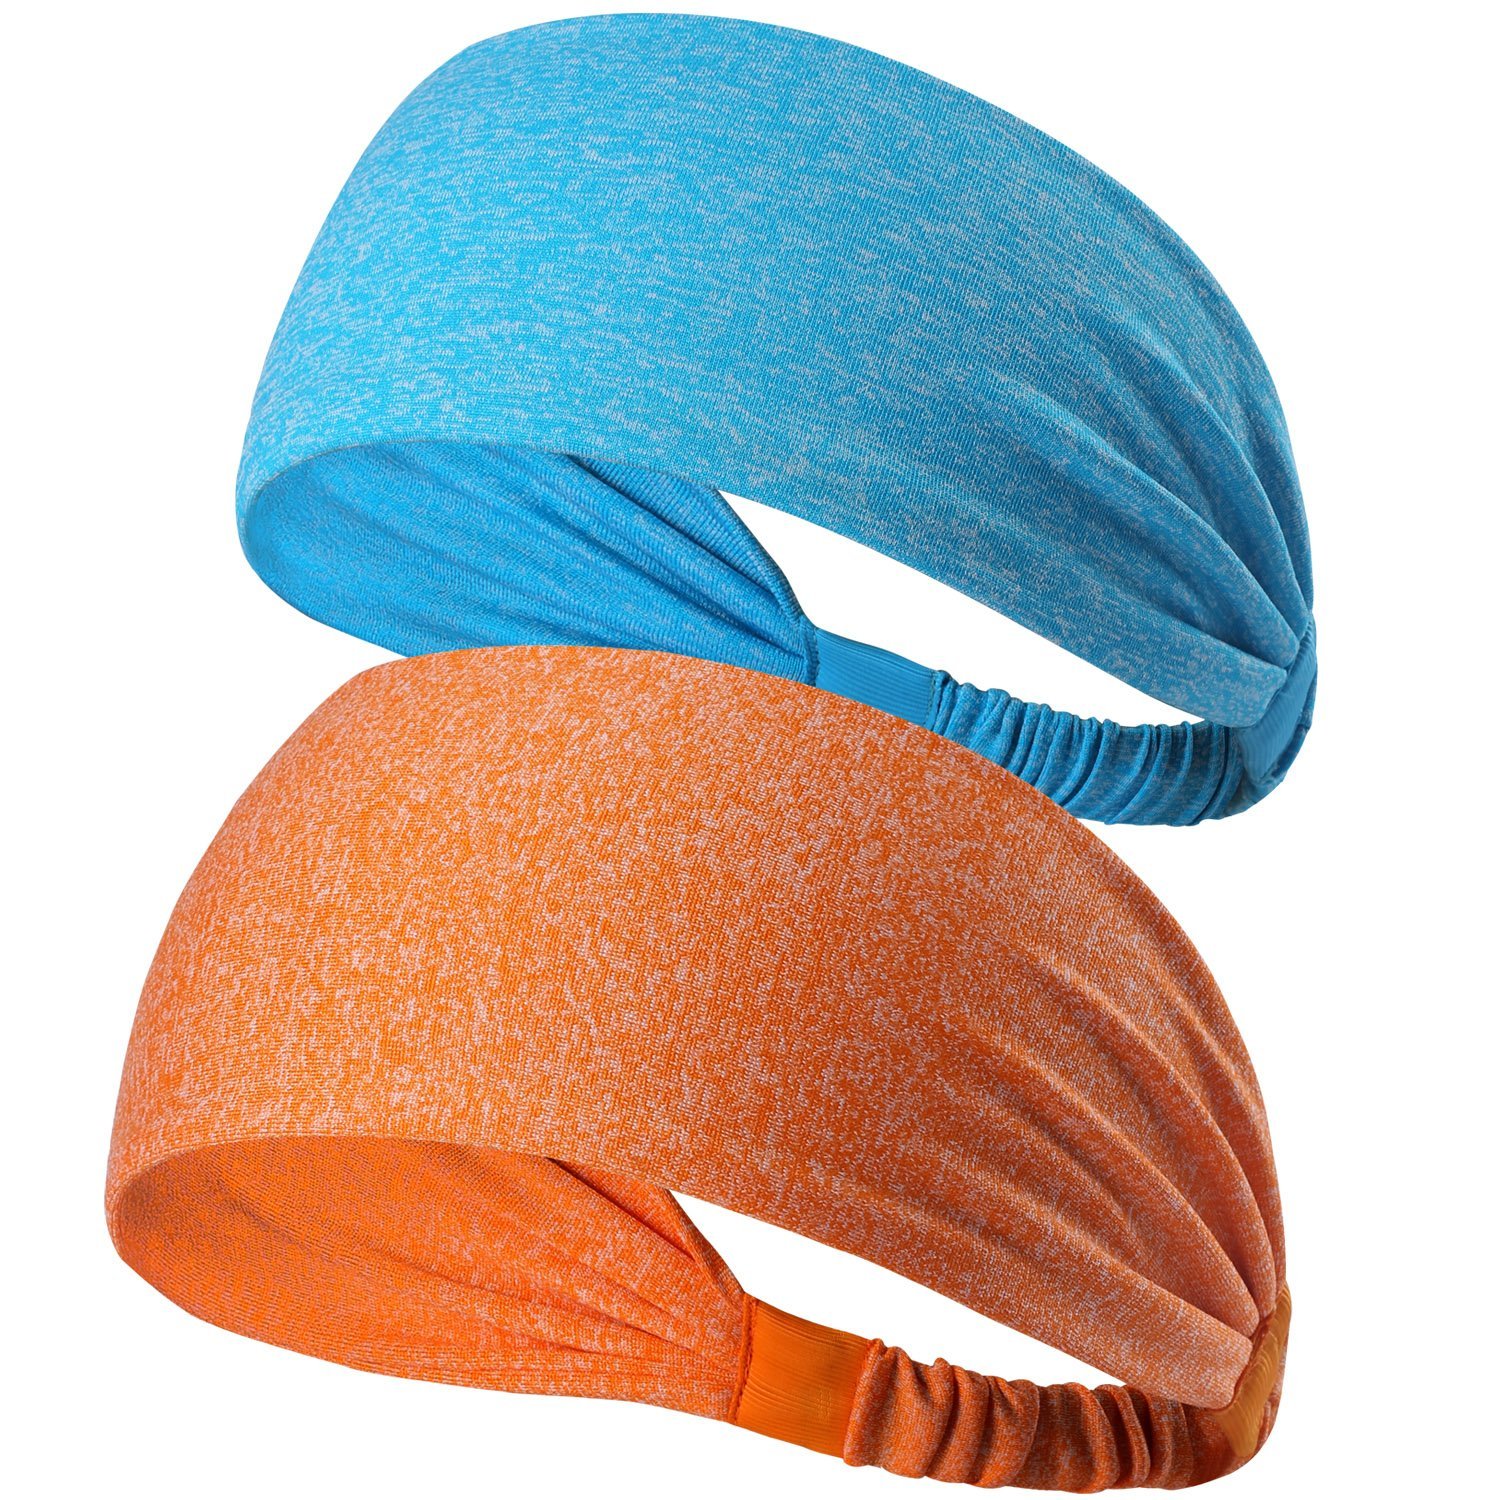 moisture-wicking headbands